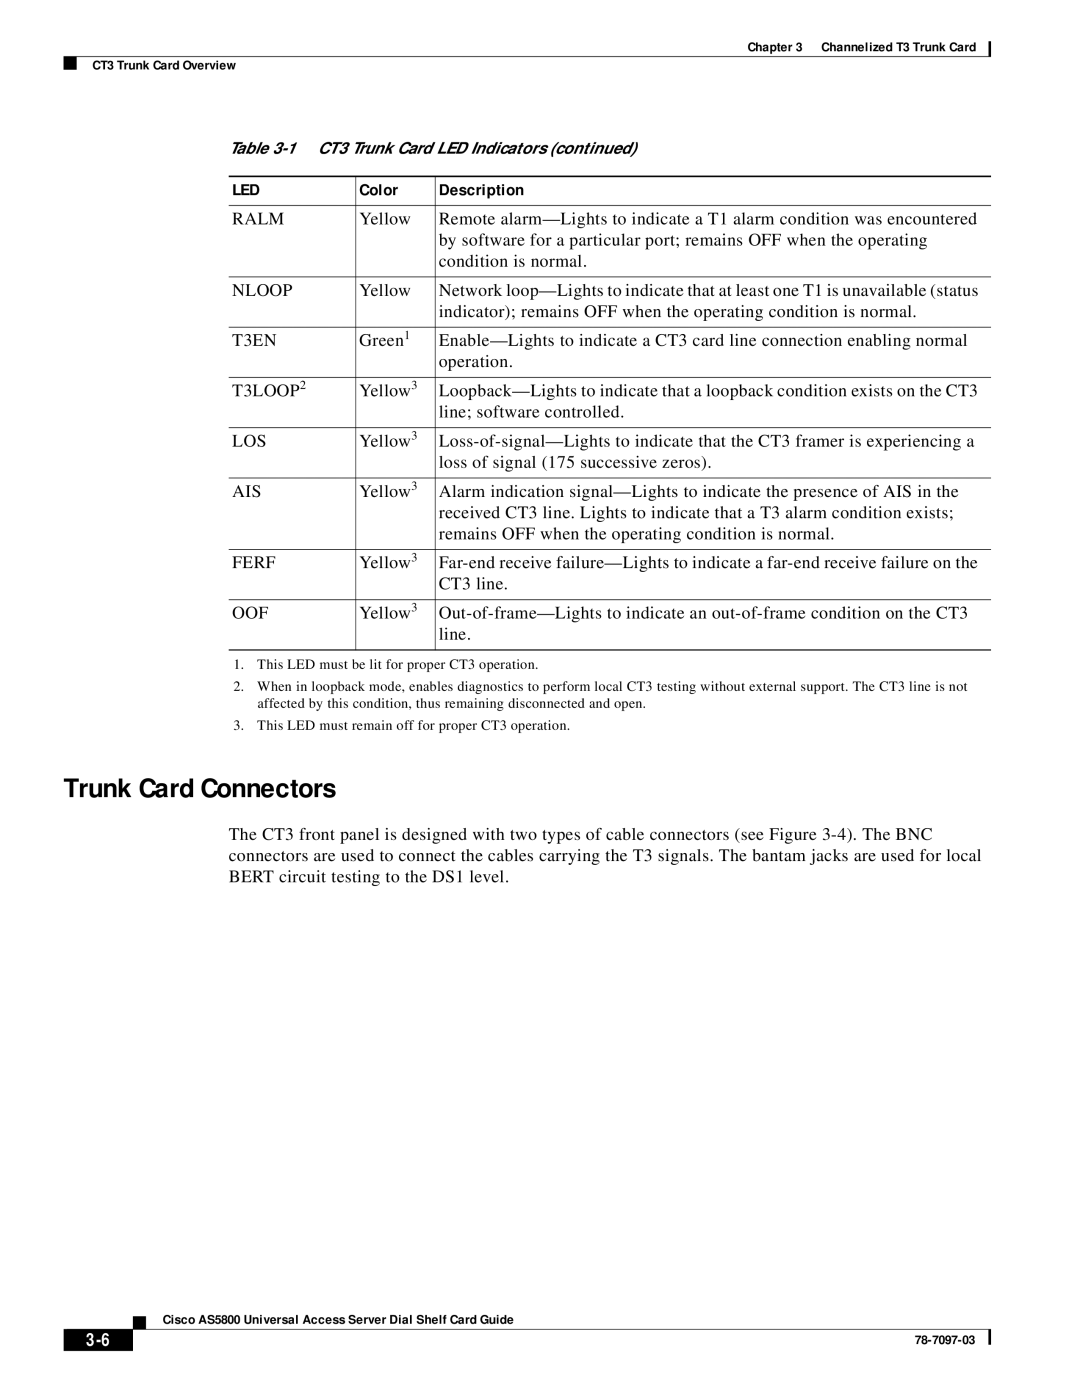 Cisco Systems AS5800 manual Trunk Card Connectors, Color, Description, 1 CT3 Trunk Card LED Indicators continued 